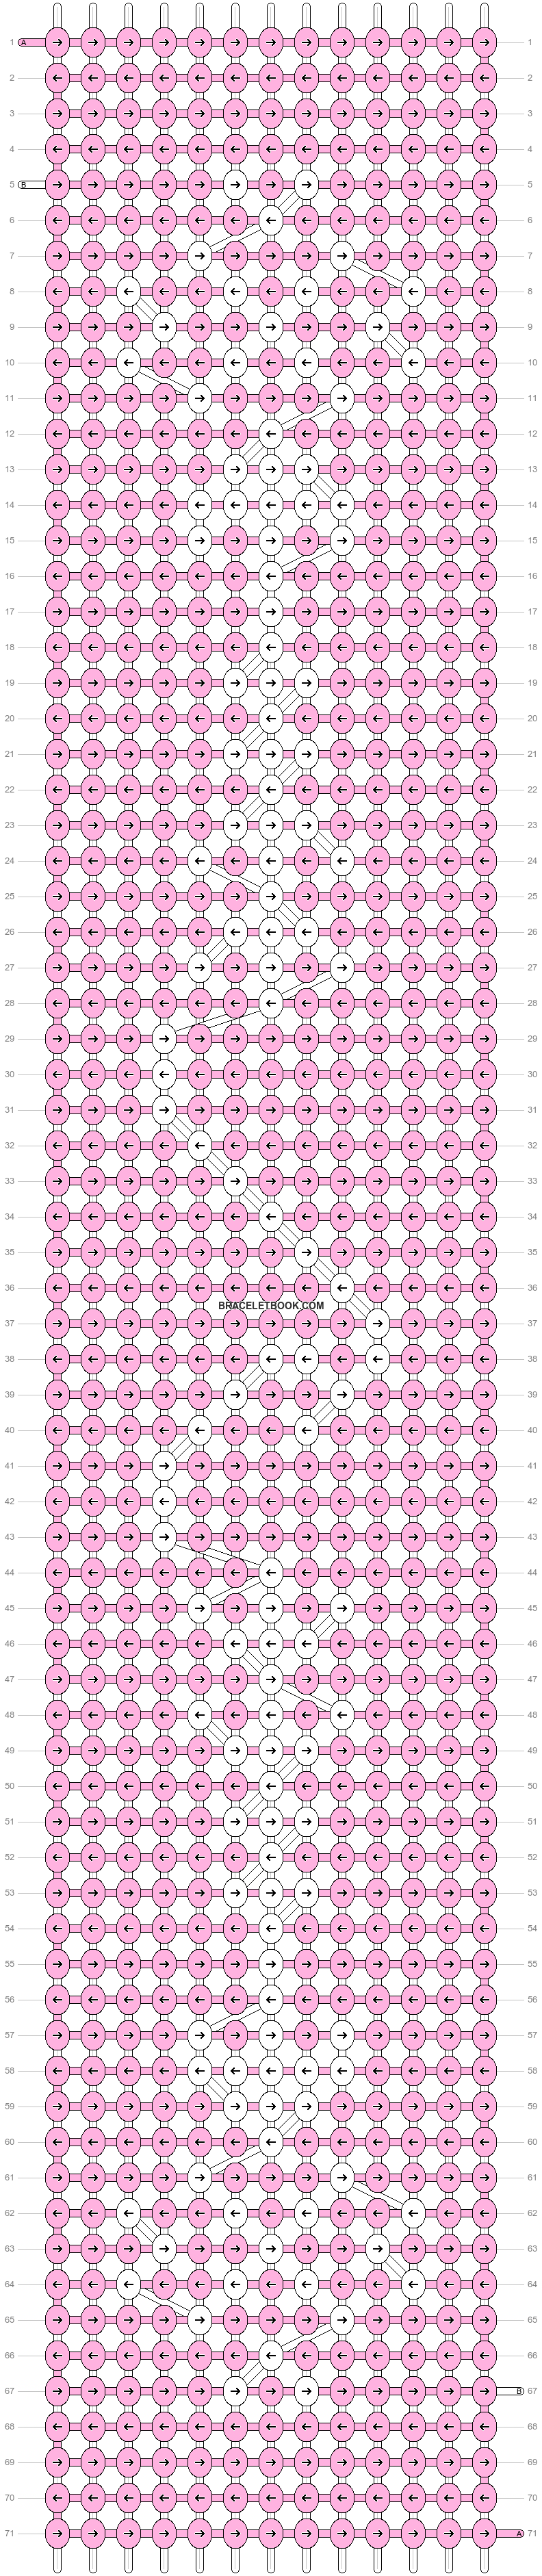 Alpha pattern #57396 variation #100299 pattern